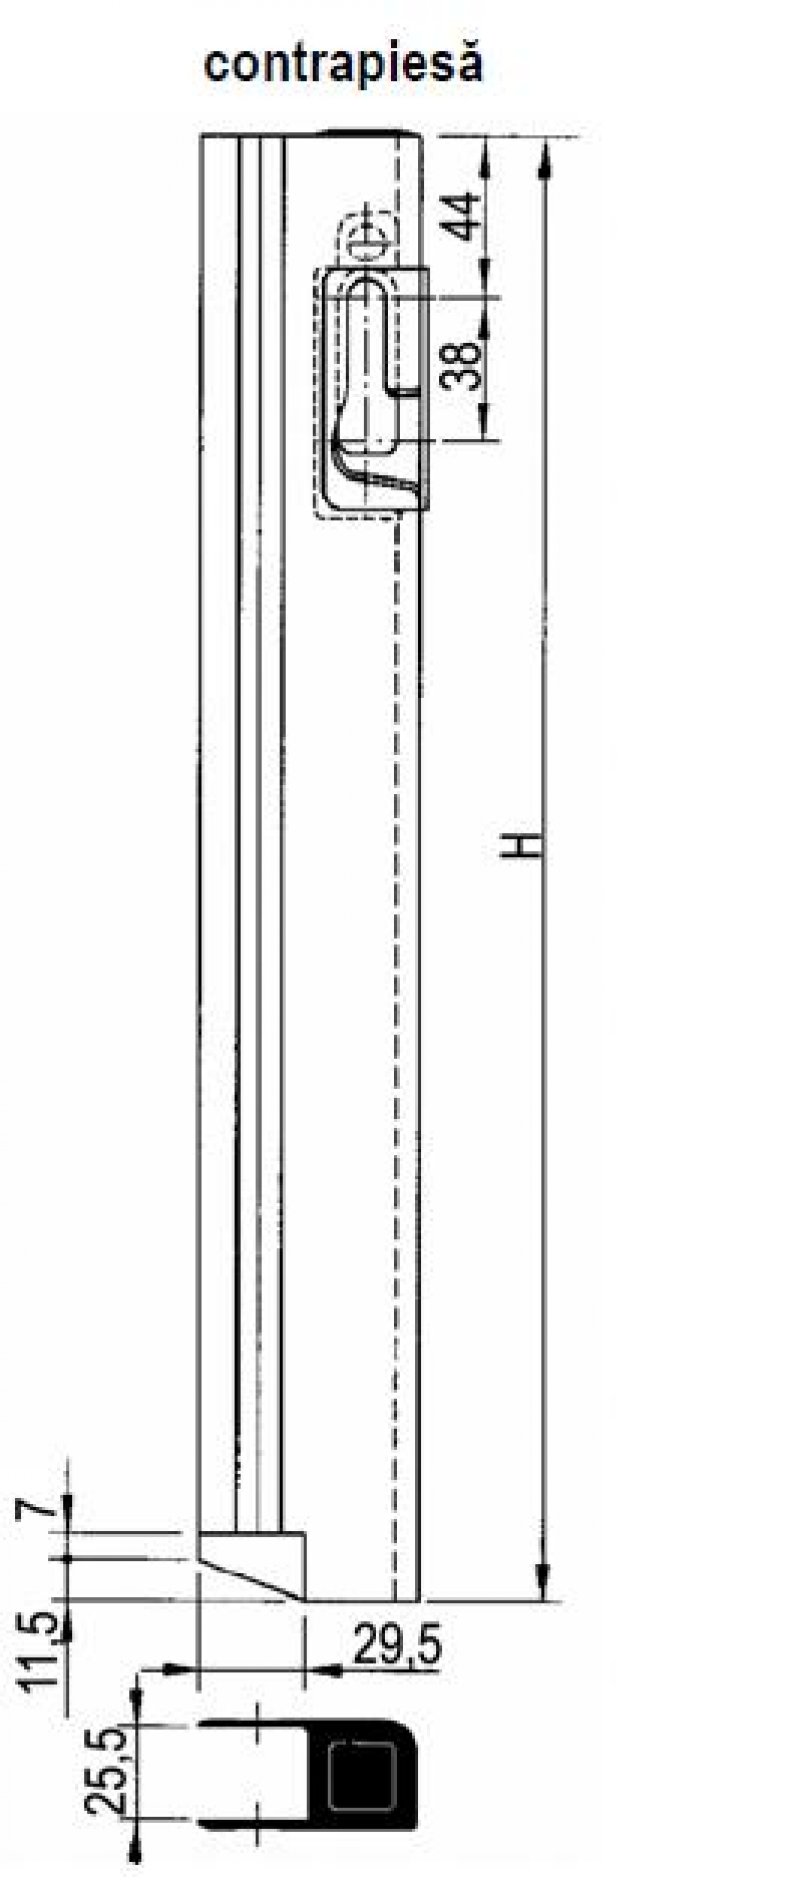 Contrapiesa inchizator oblon 400 mm colt tip 1